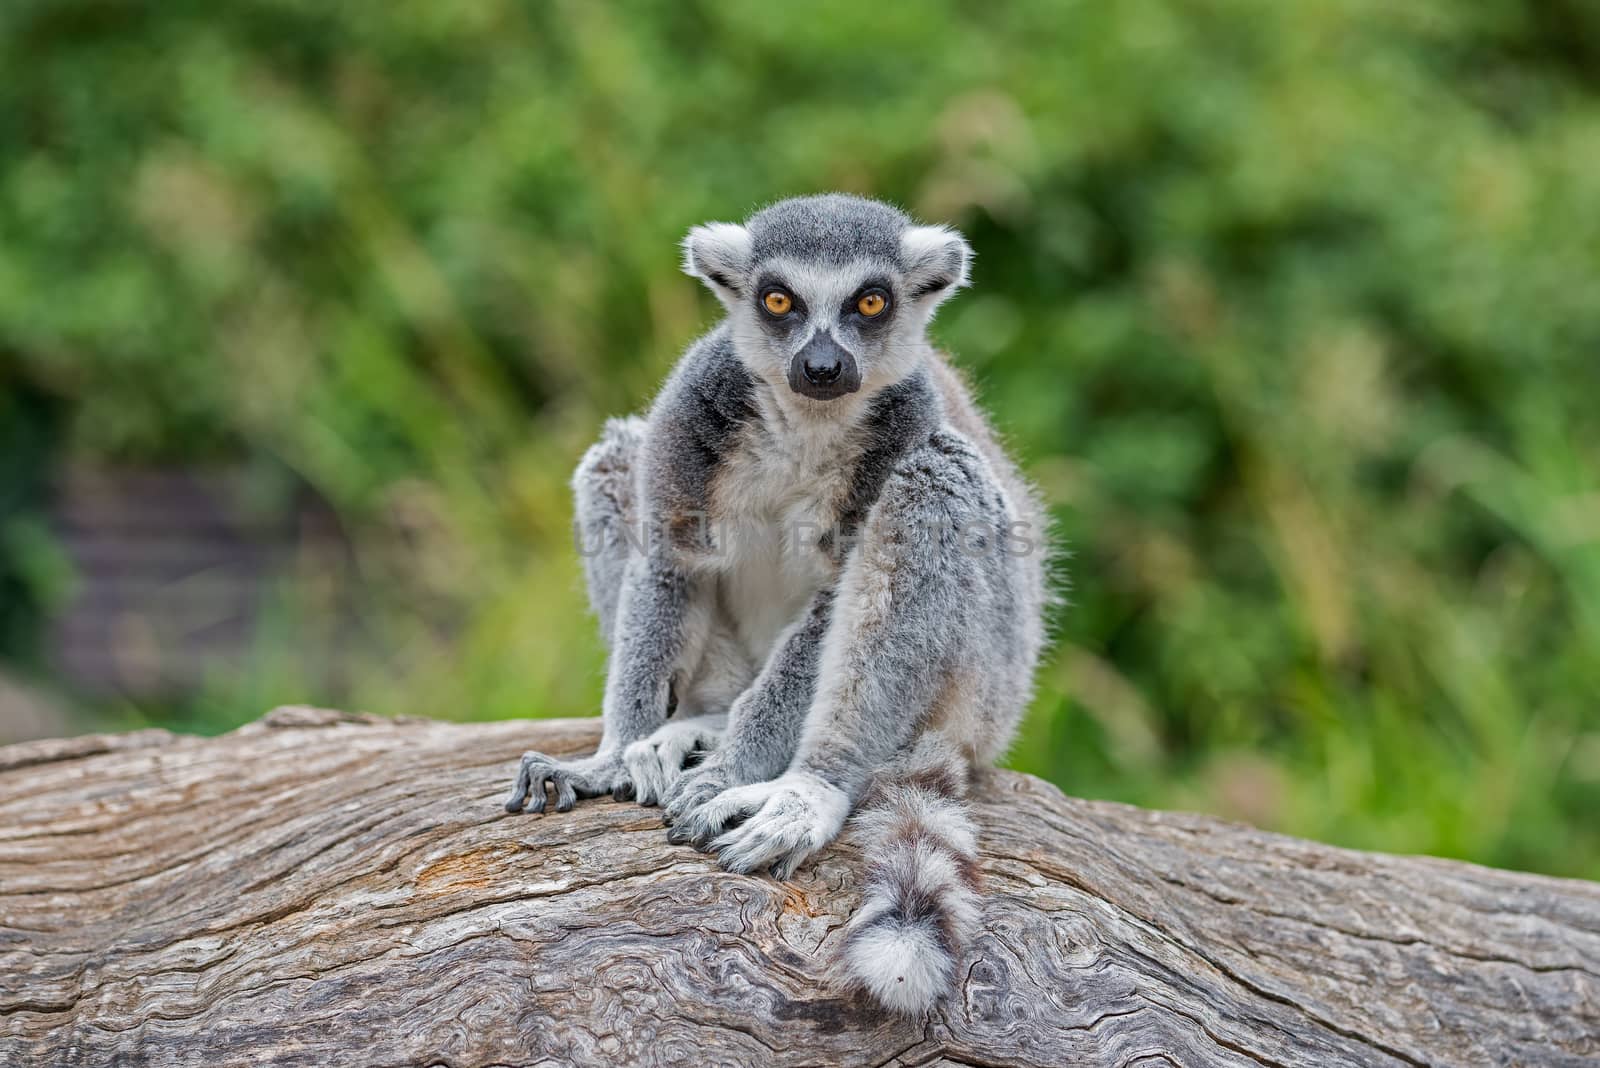 Ring-tailed Lemur also known as Lemur catta.